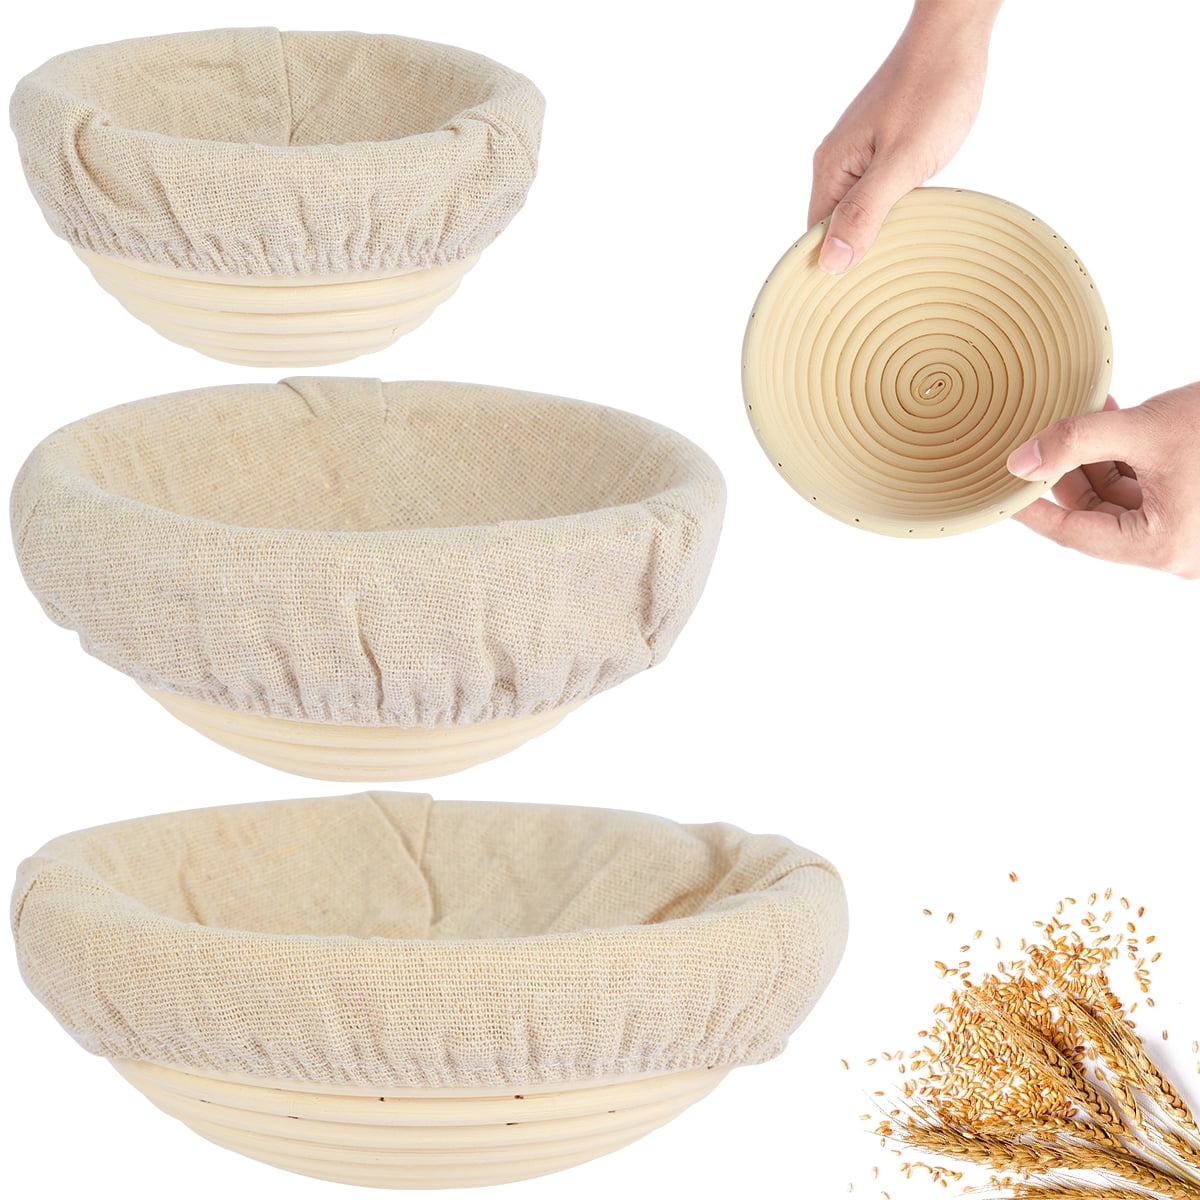 Yorkmills 2pcs 9 Inch Round Banneton Bread Proofing Basket set